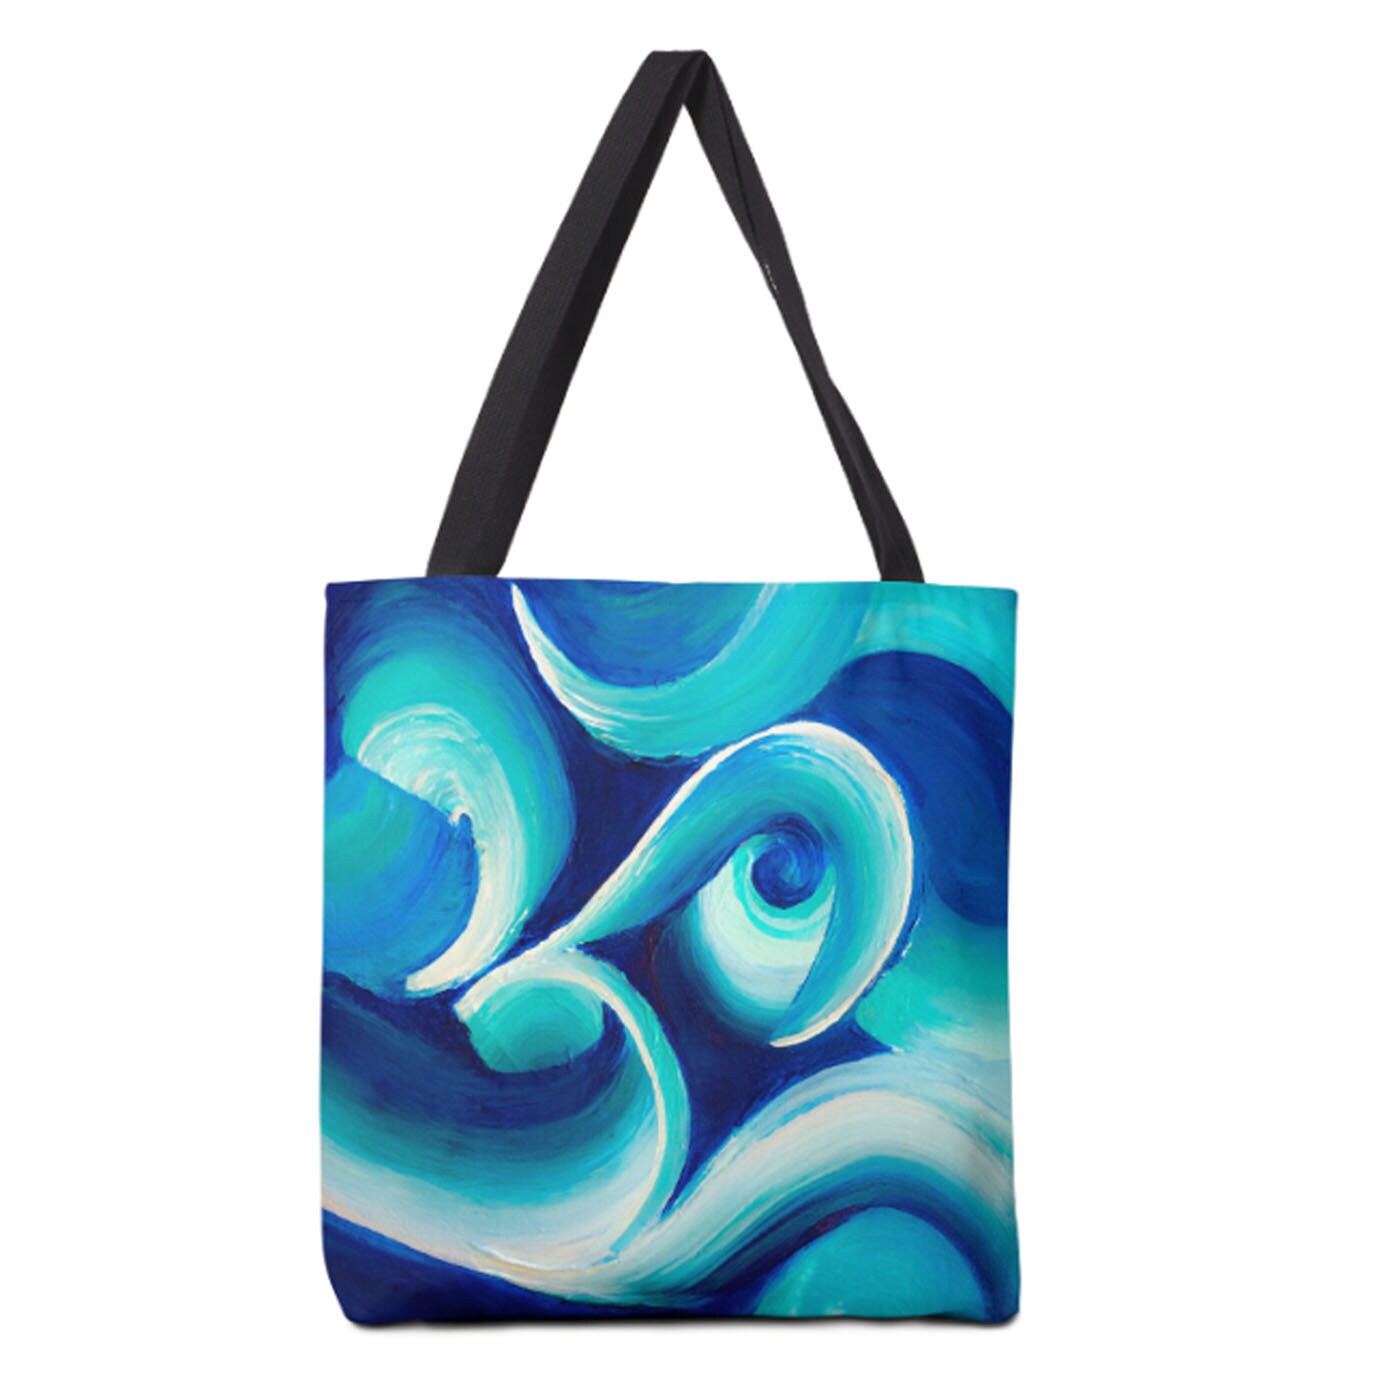 OM Tote Bag blue Totes Spiritual Gift Blue sac Aqua tote Artsy Gift yoga gift Meditation psychadelic hippy bag large yoga totes cheap gift